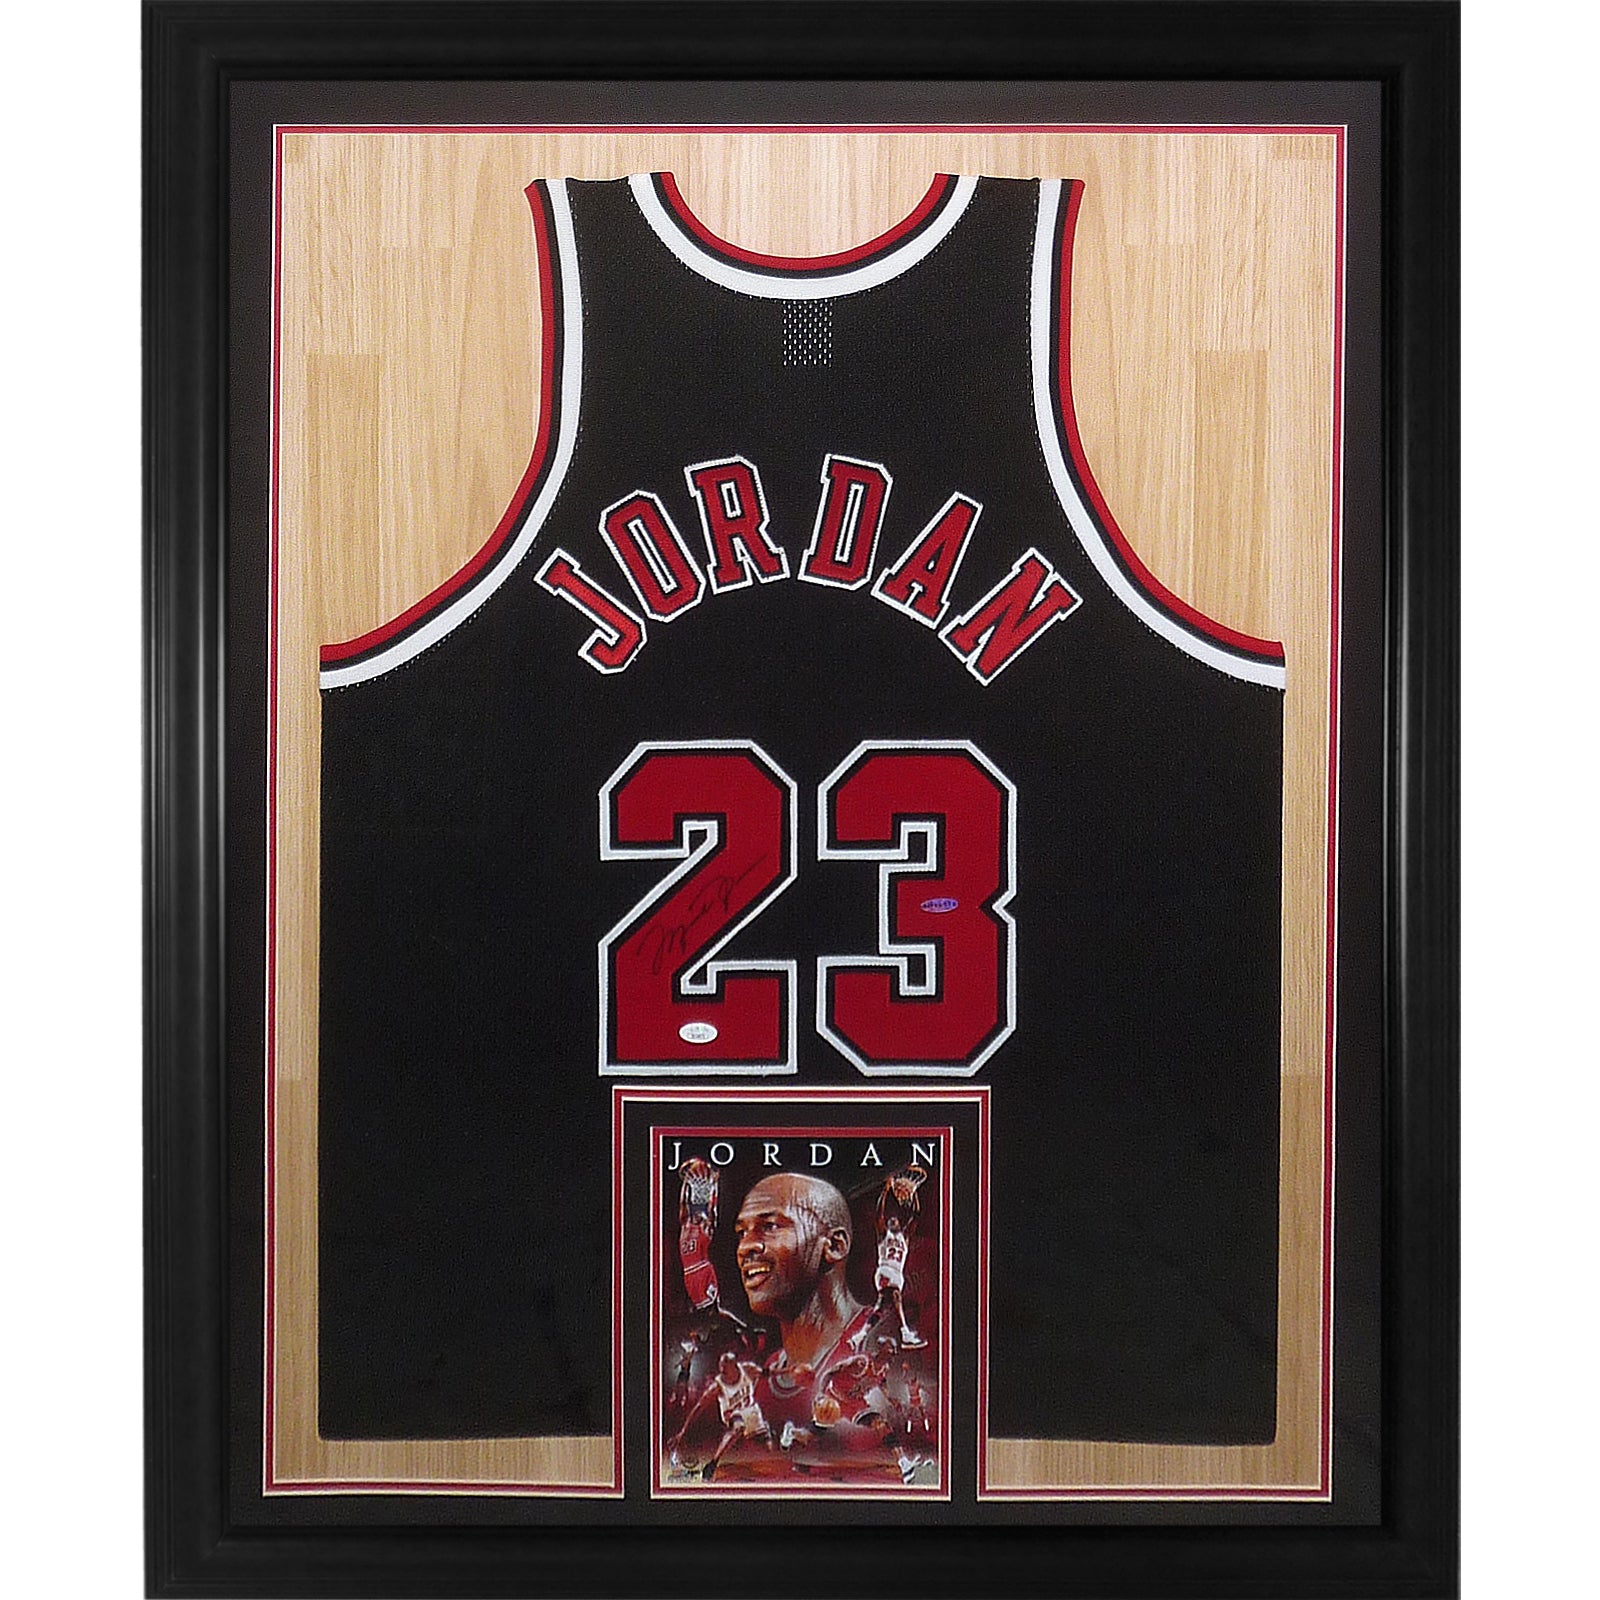 Michael Jordan Autographed Jersey - Mitchell & Ness - UDA